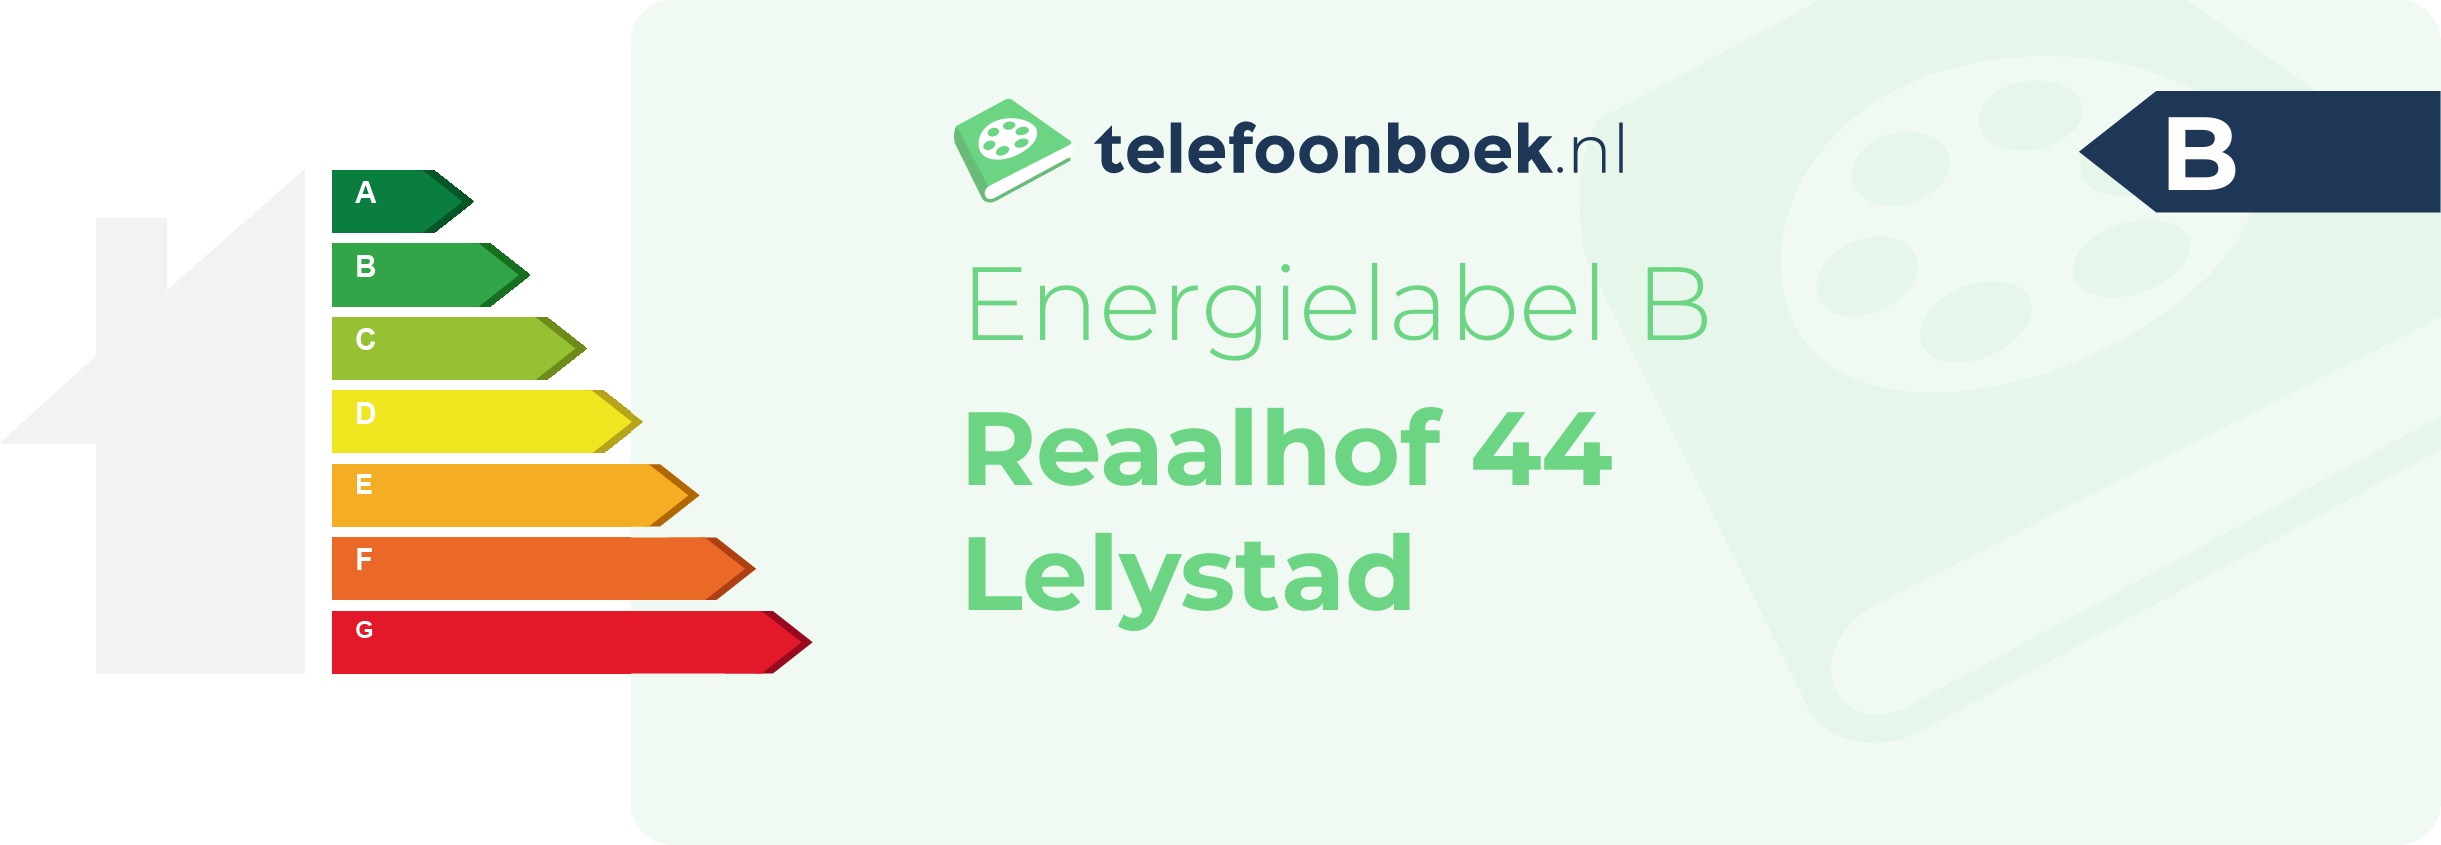 Energielabel Reaalhof 44 Lelystad